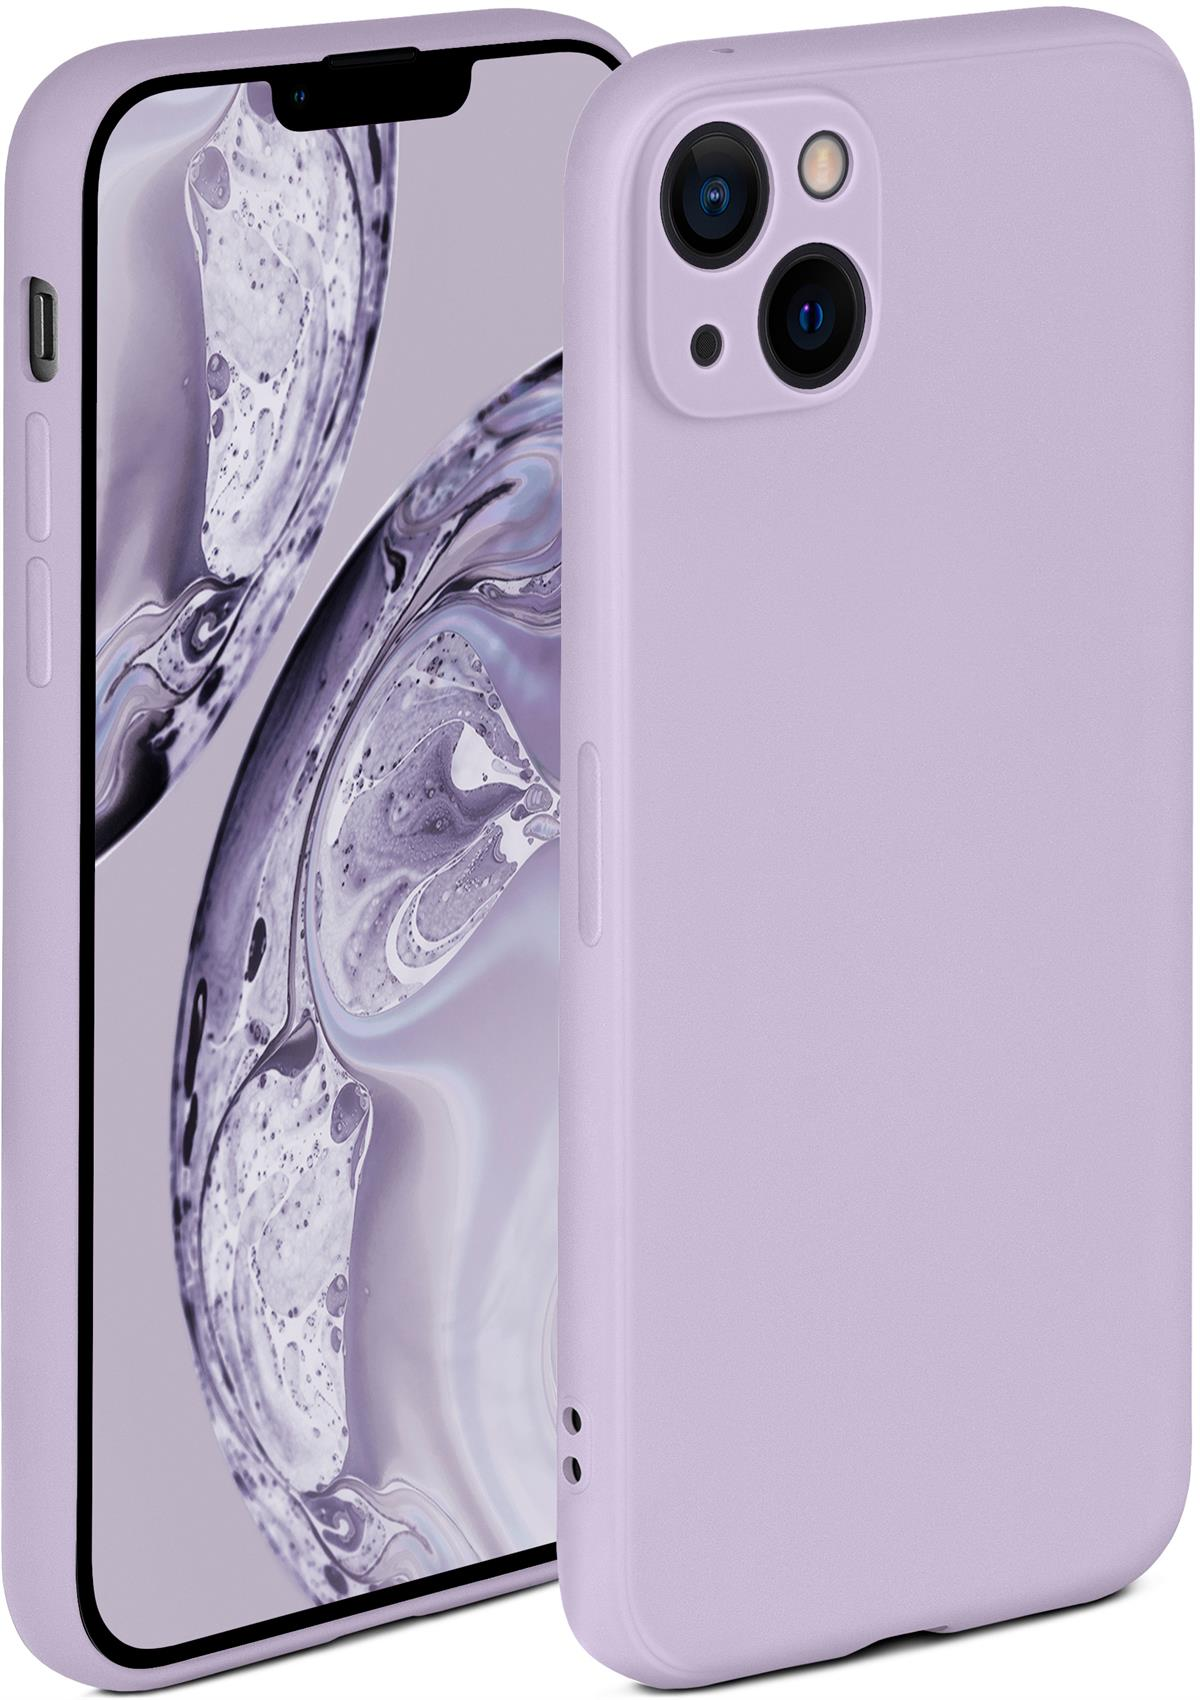 iPhone 14 Flieder Plus, ONEFLOW Case, Apple, Backcover, Soft